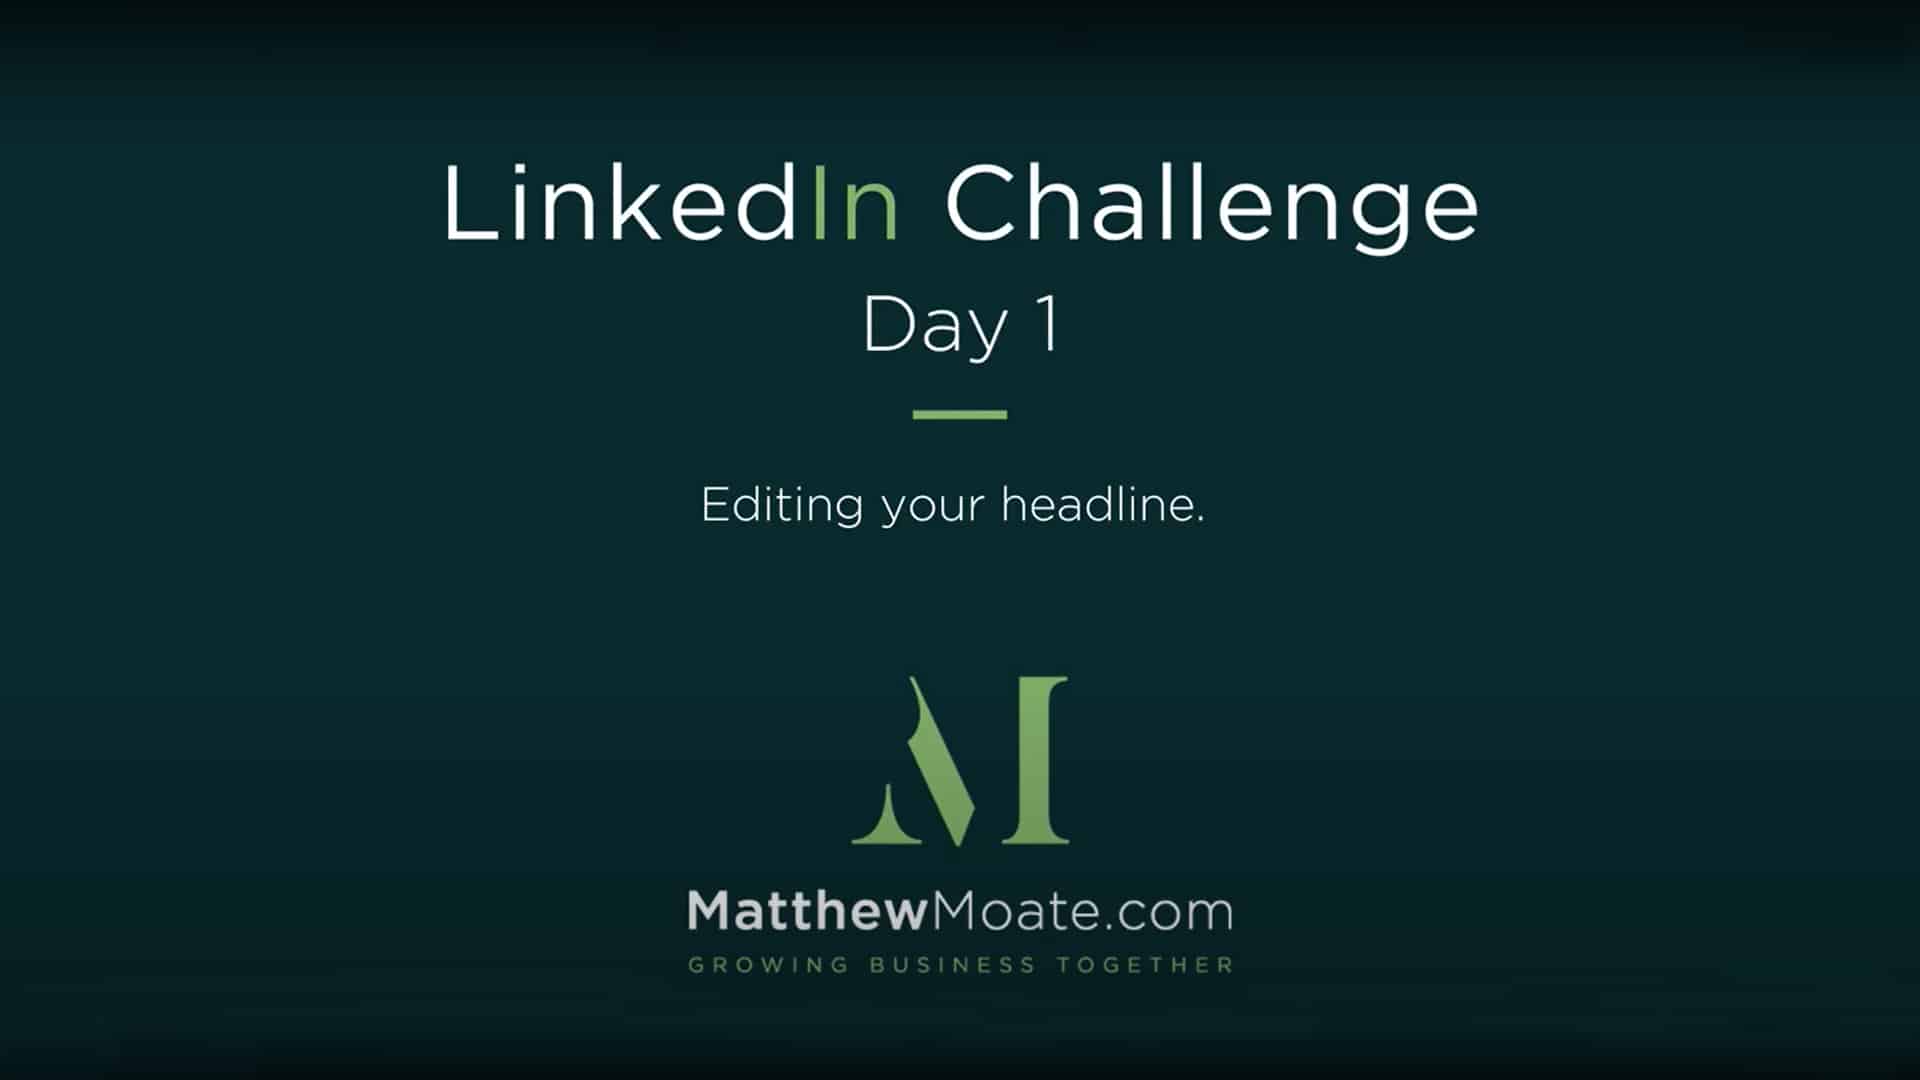 Matthew Moate's LinkedIn Challenge DAY 1